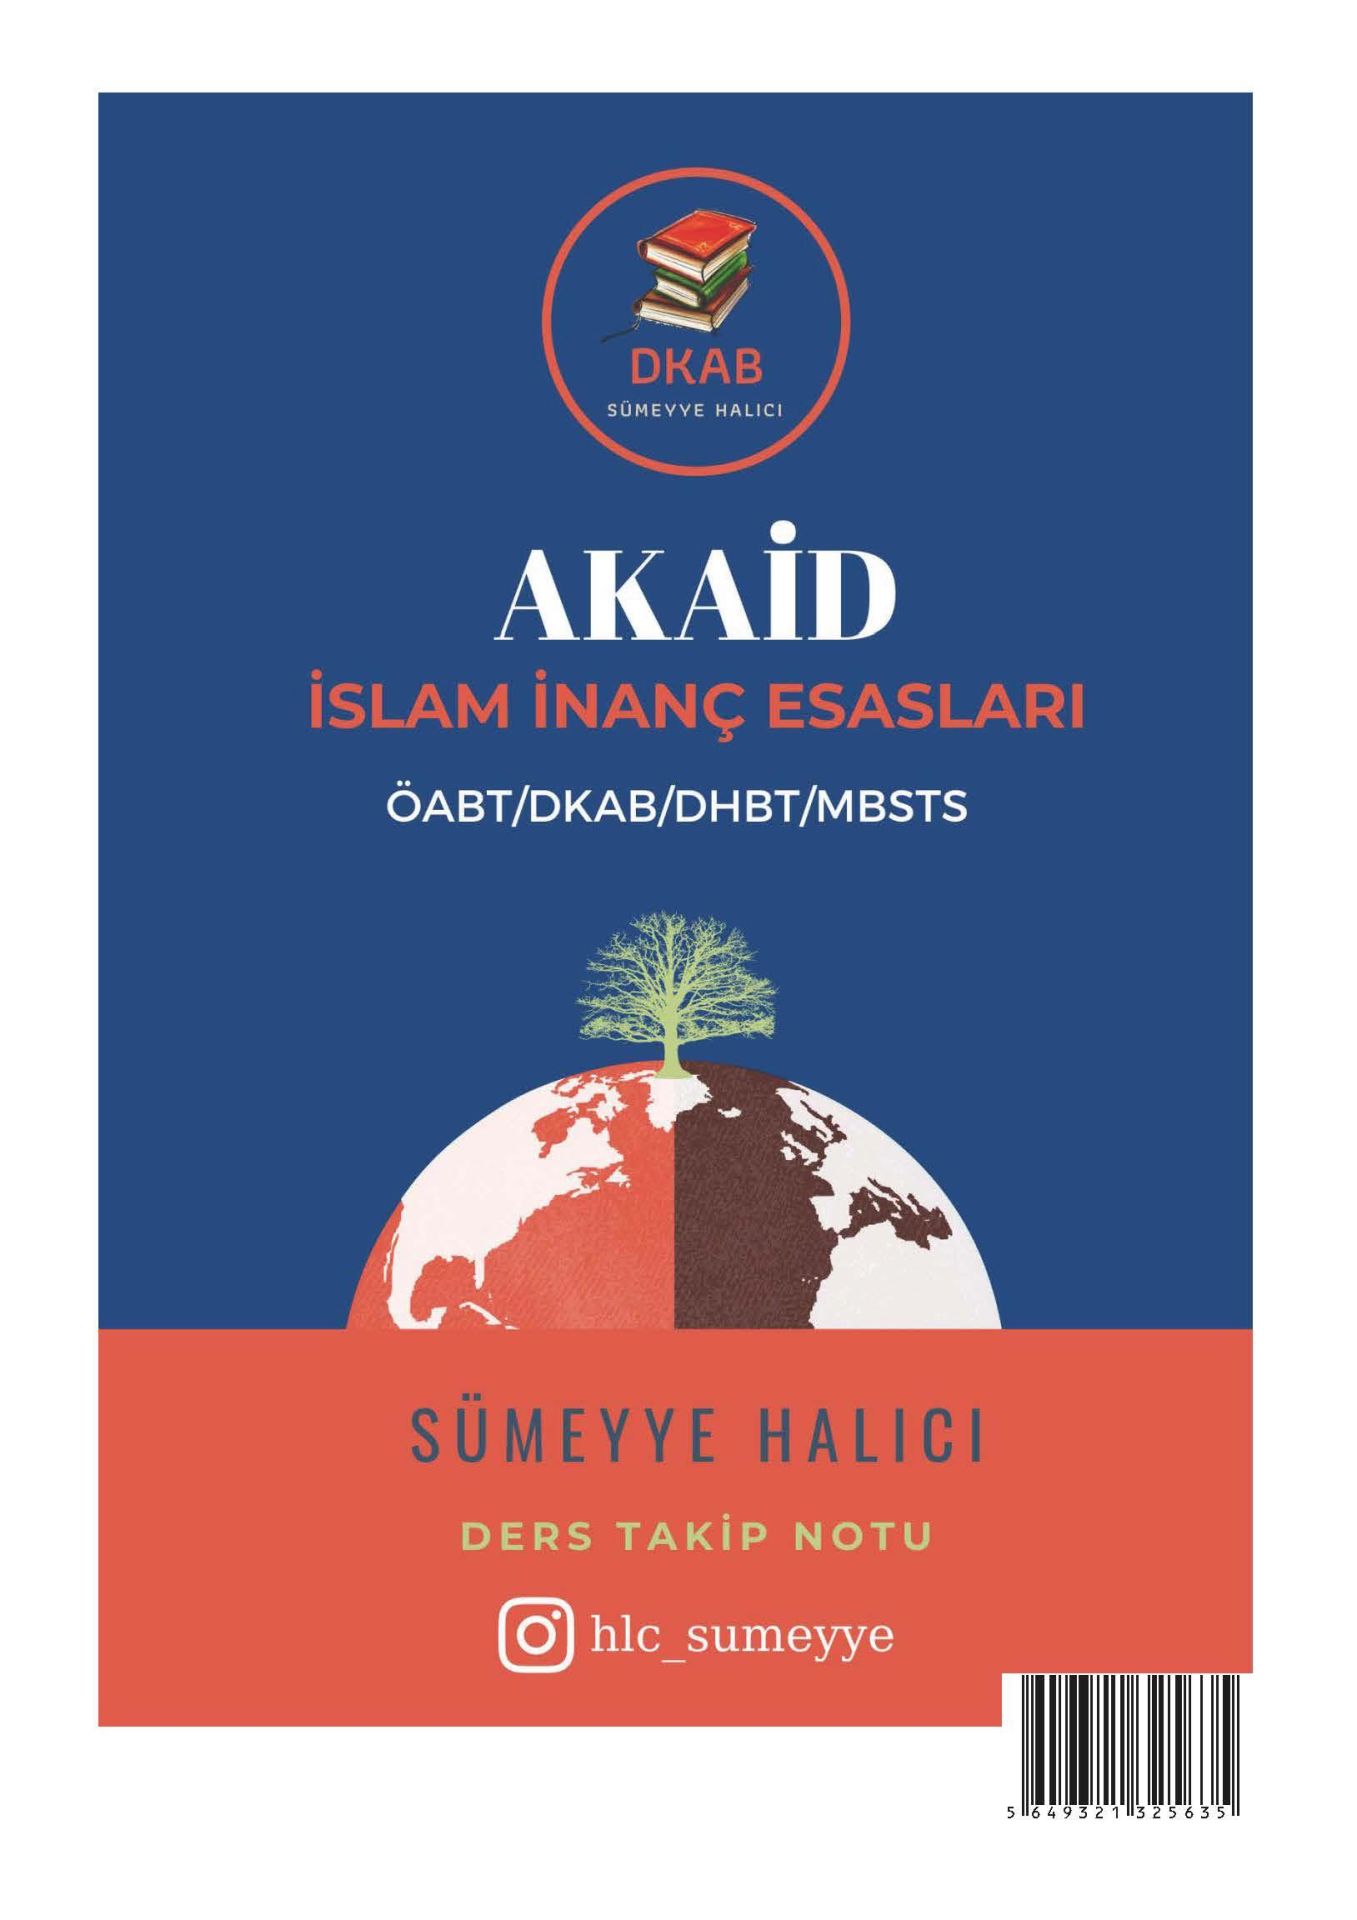 İslam İnanç Esasları ÖABT/DKAB/DHBT/MBSTS 2021 Ders Takip Notu - Sümeyye Halıcı